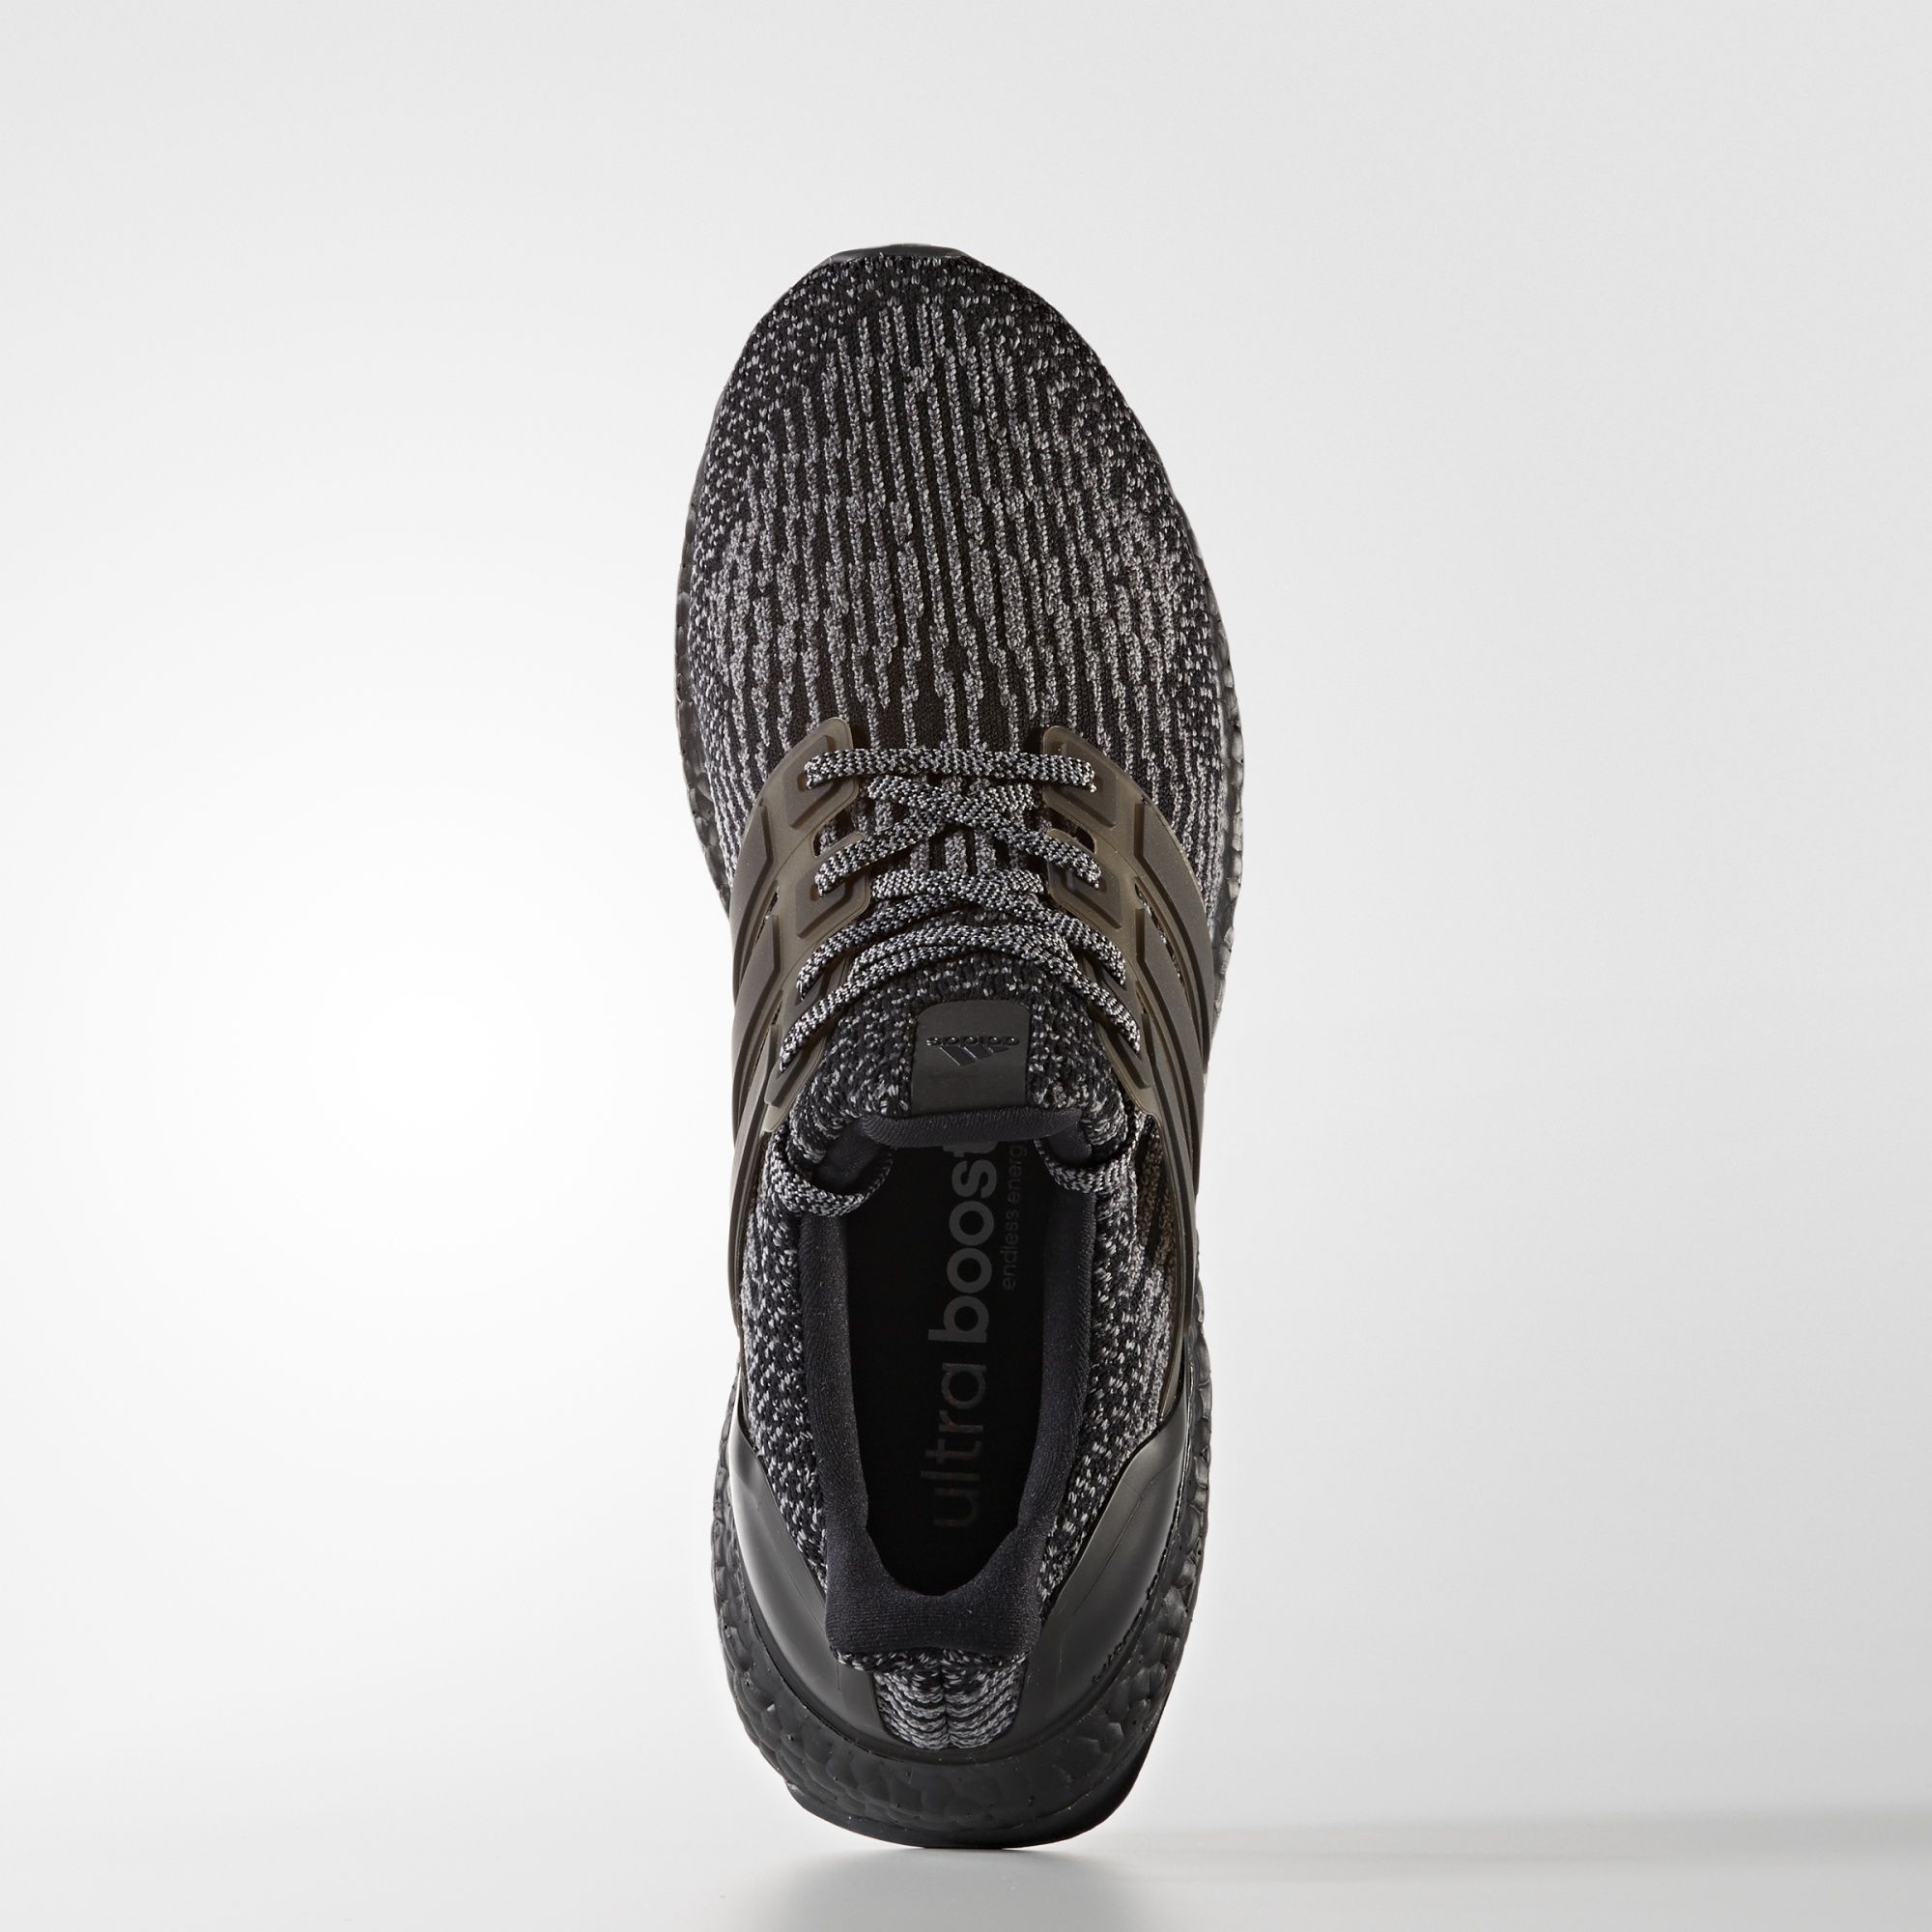 Adidas Ultra Boost
Core Black / Grey